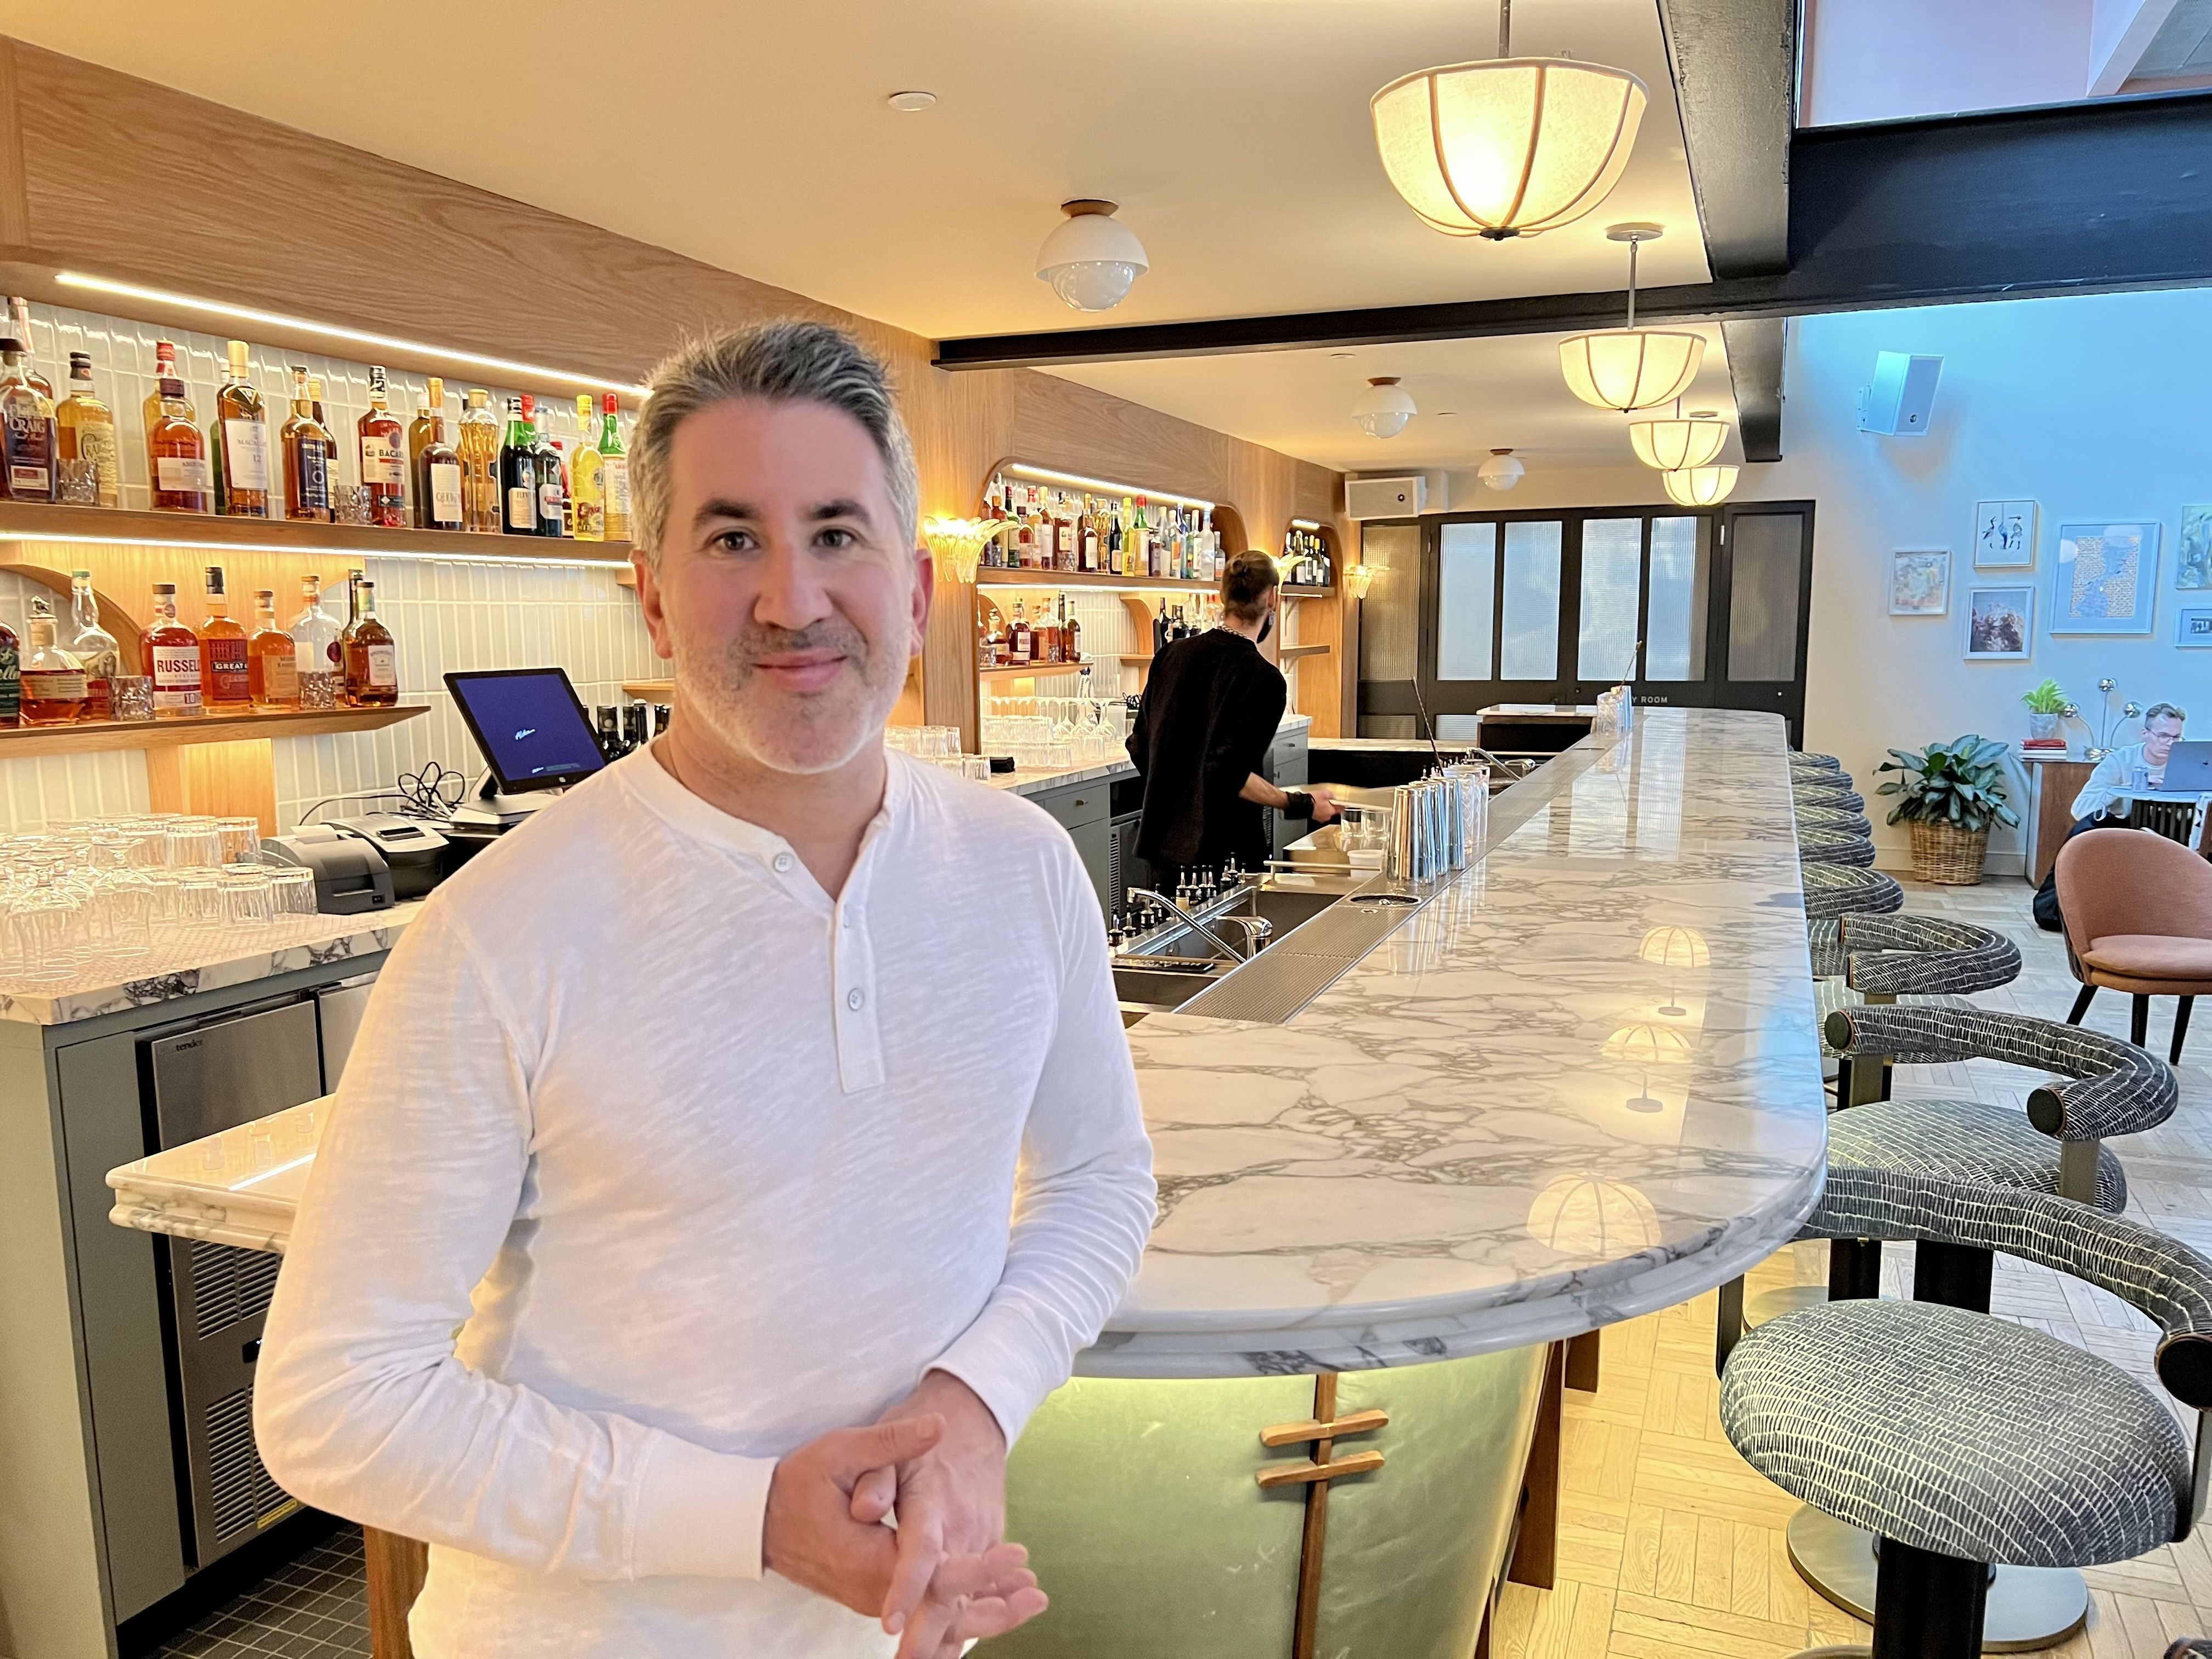 Philadelphia Chef Michael Solomonov Is Firing Up an NYC Return